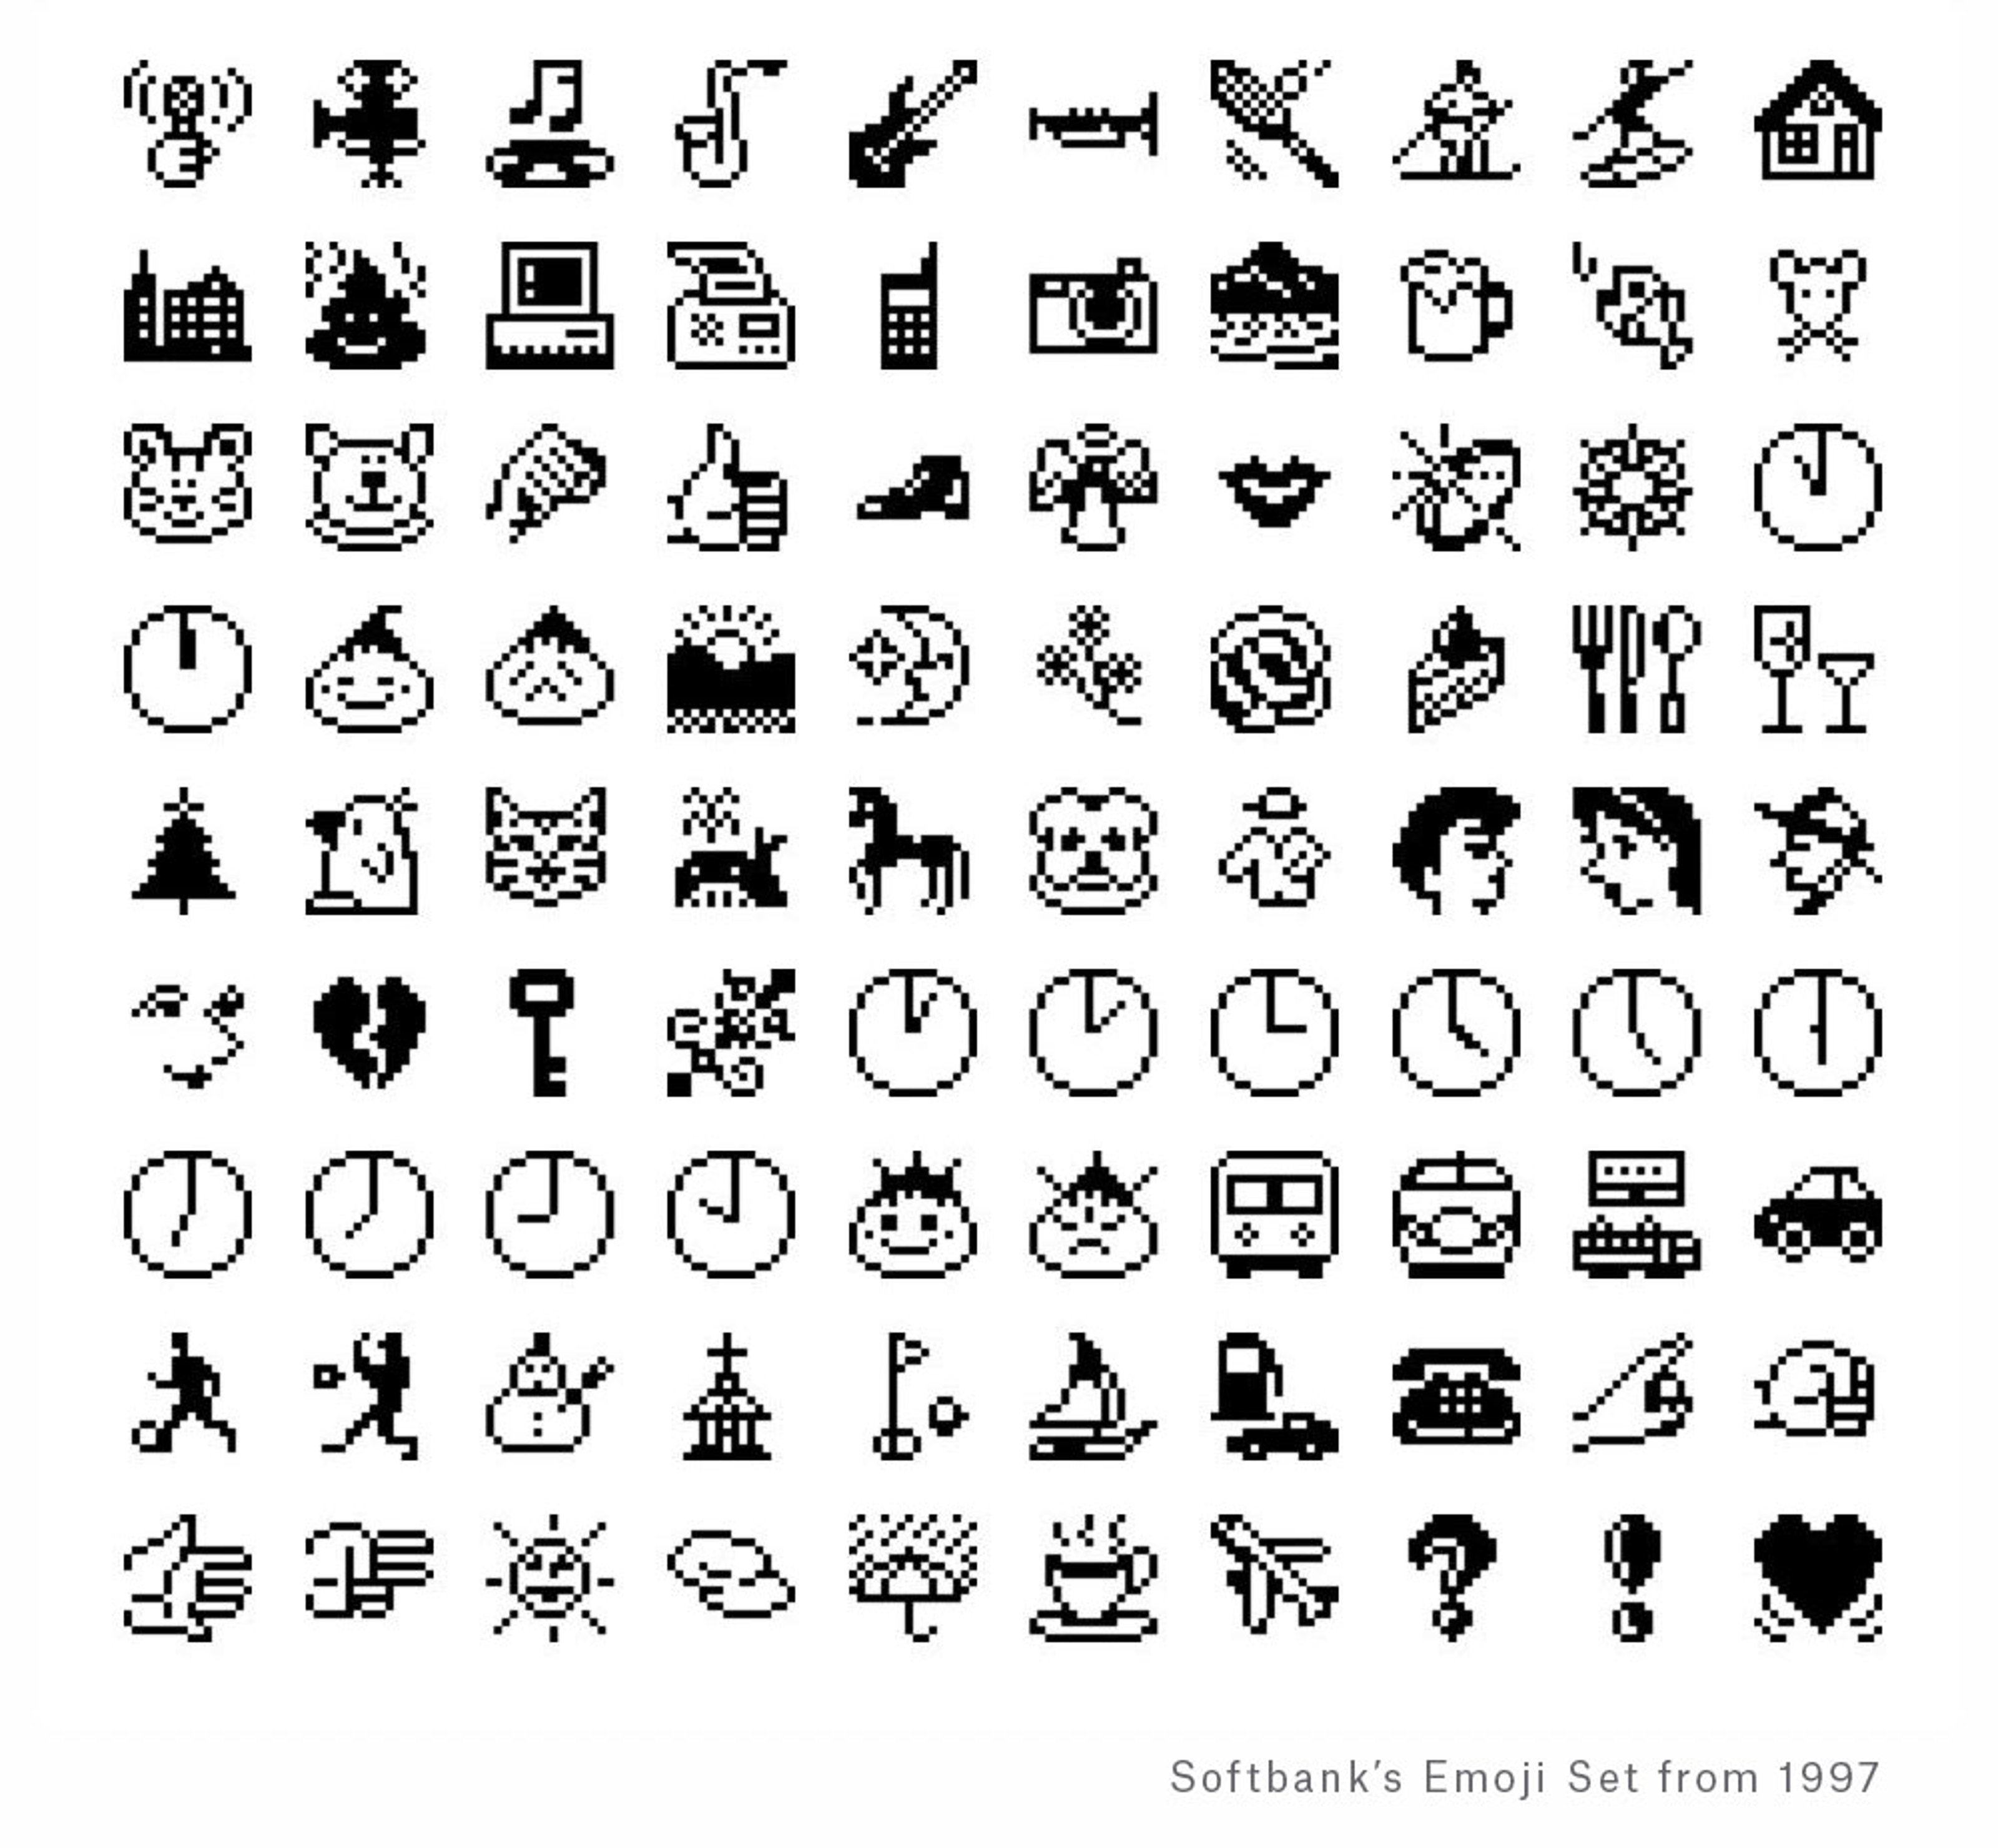 Softbank's set of Emoji from 1997